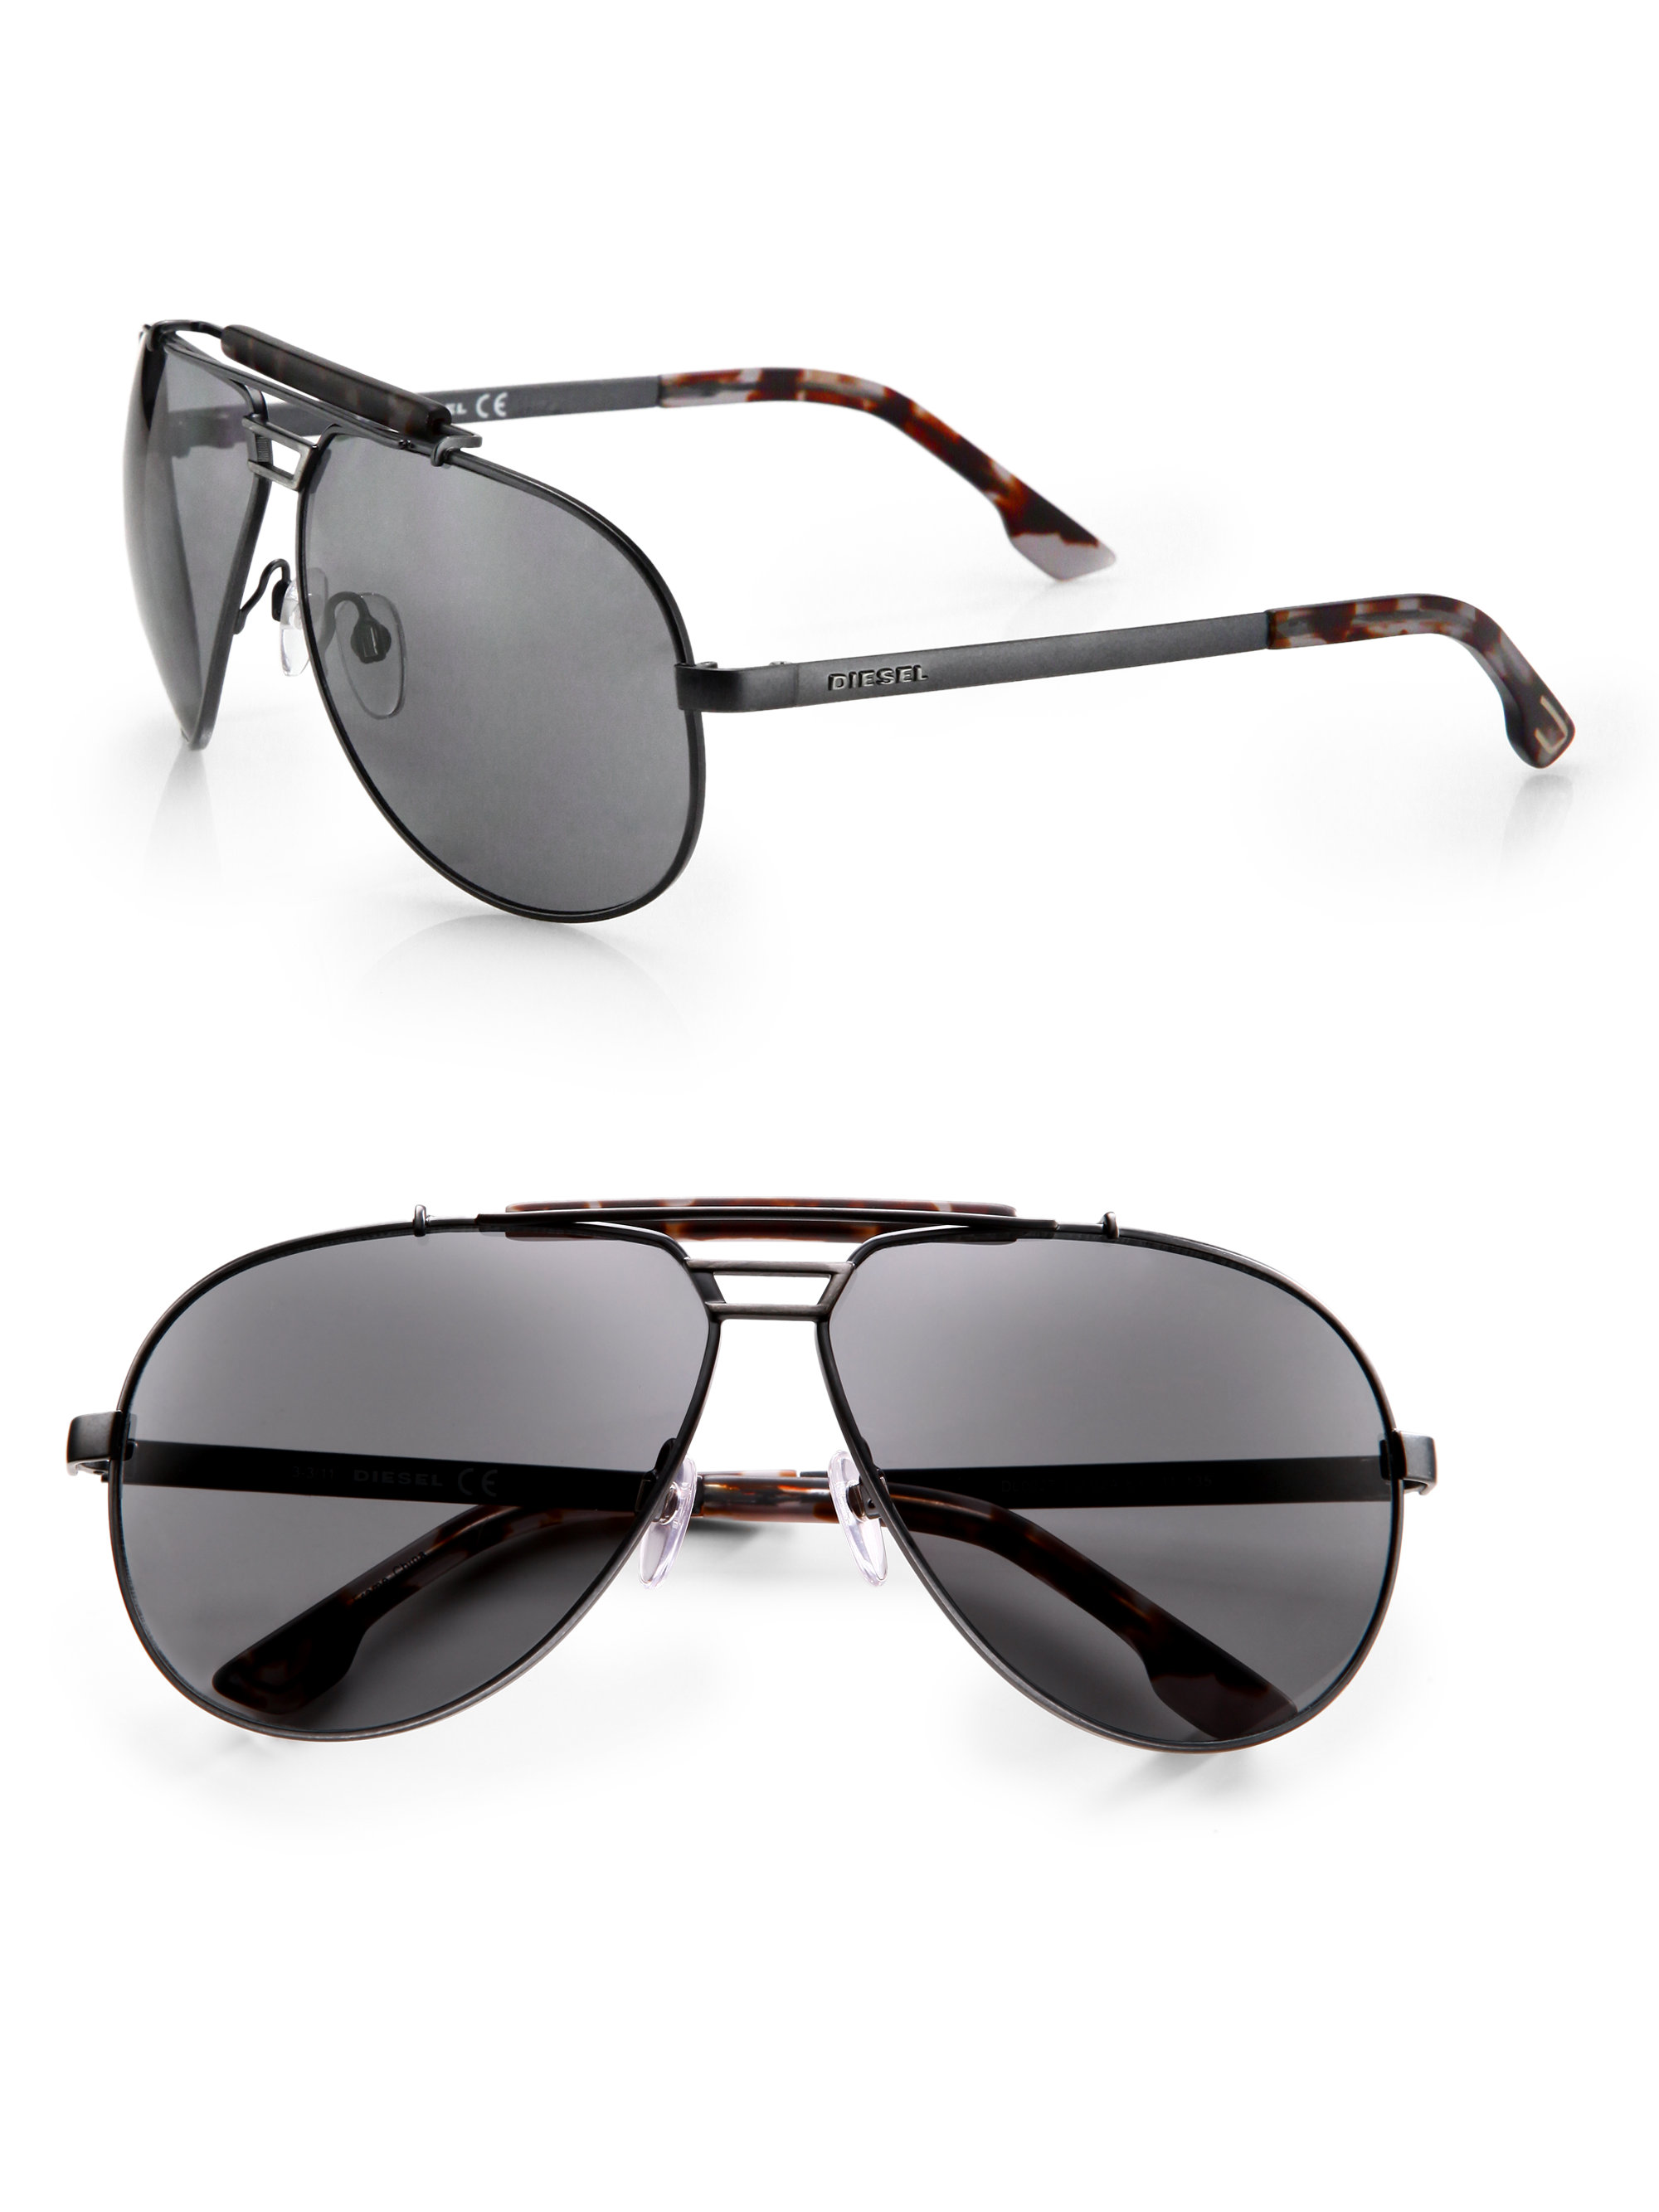 DIESEL Metal Aviator Sunglasses in Black-Grey (Black) for Men - Lyst